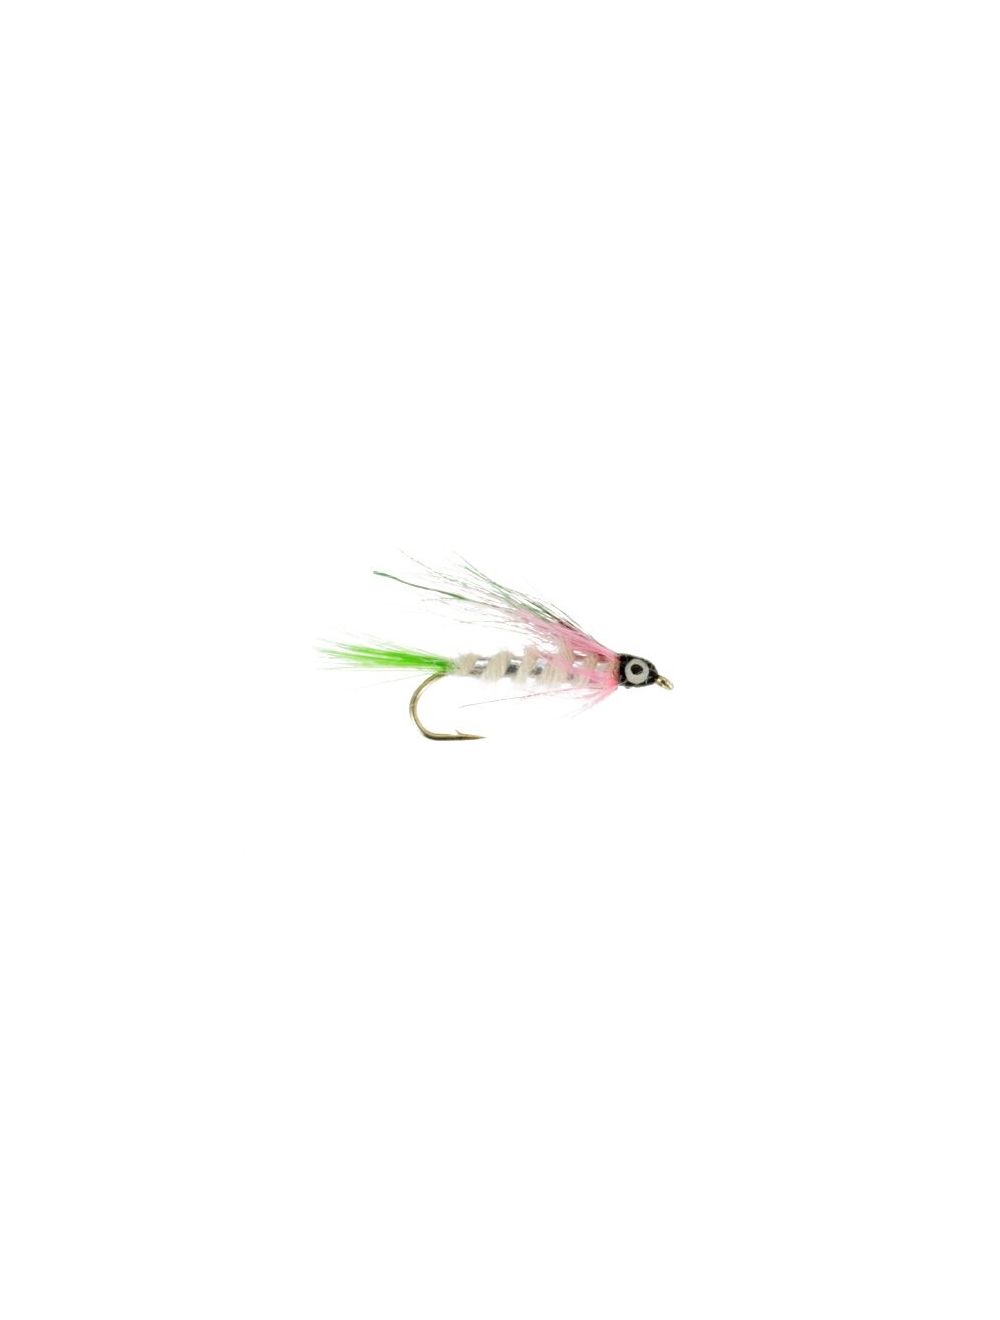 https://eadn-wc02-1020161.nxedge.io/cdn/media/catalog/product/cache/32b930e20bfef0c9badd7ee253a86131/l/i/little-rainbow-trout-fly-fishing-flies-streamers_preview.jpeg